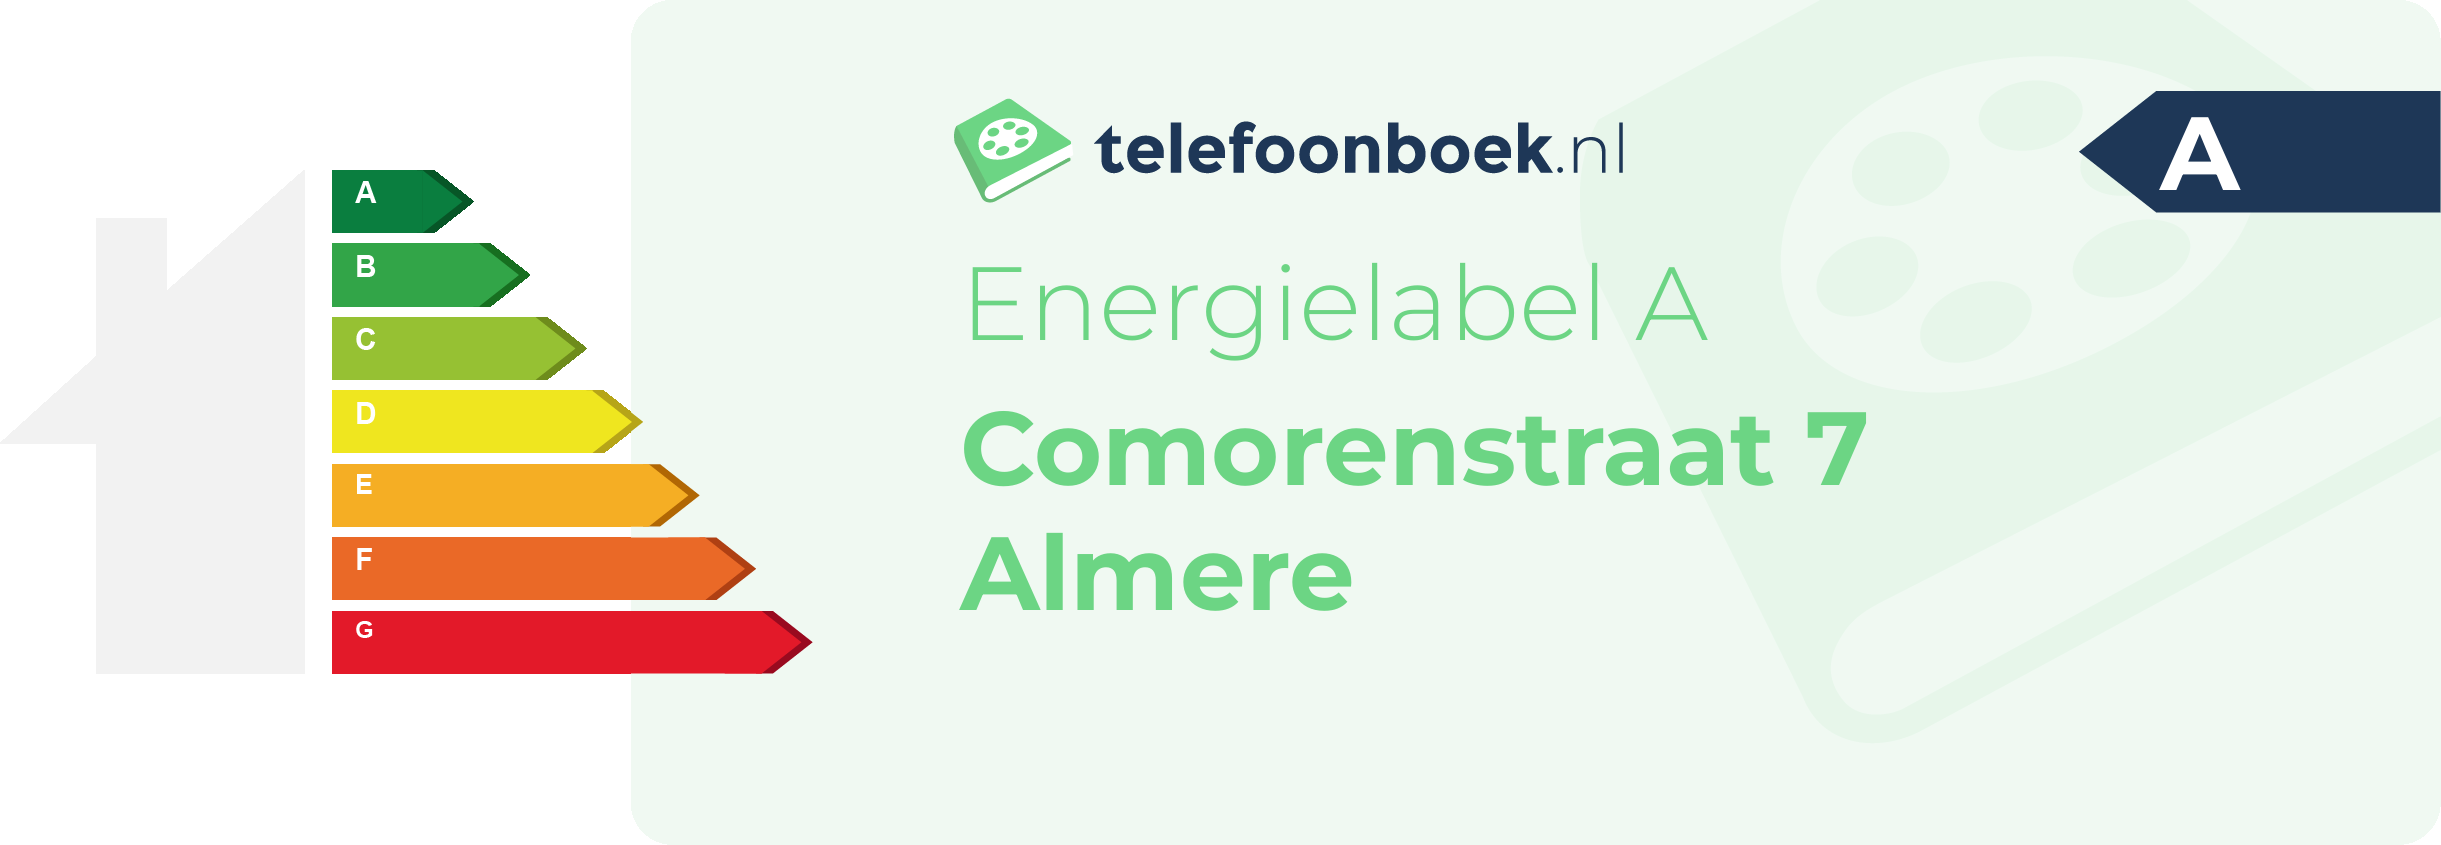 Energielabel Comorenstraat 7 Almere